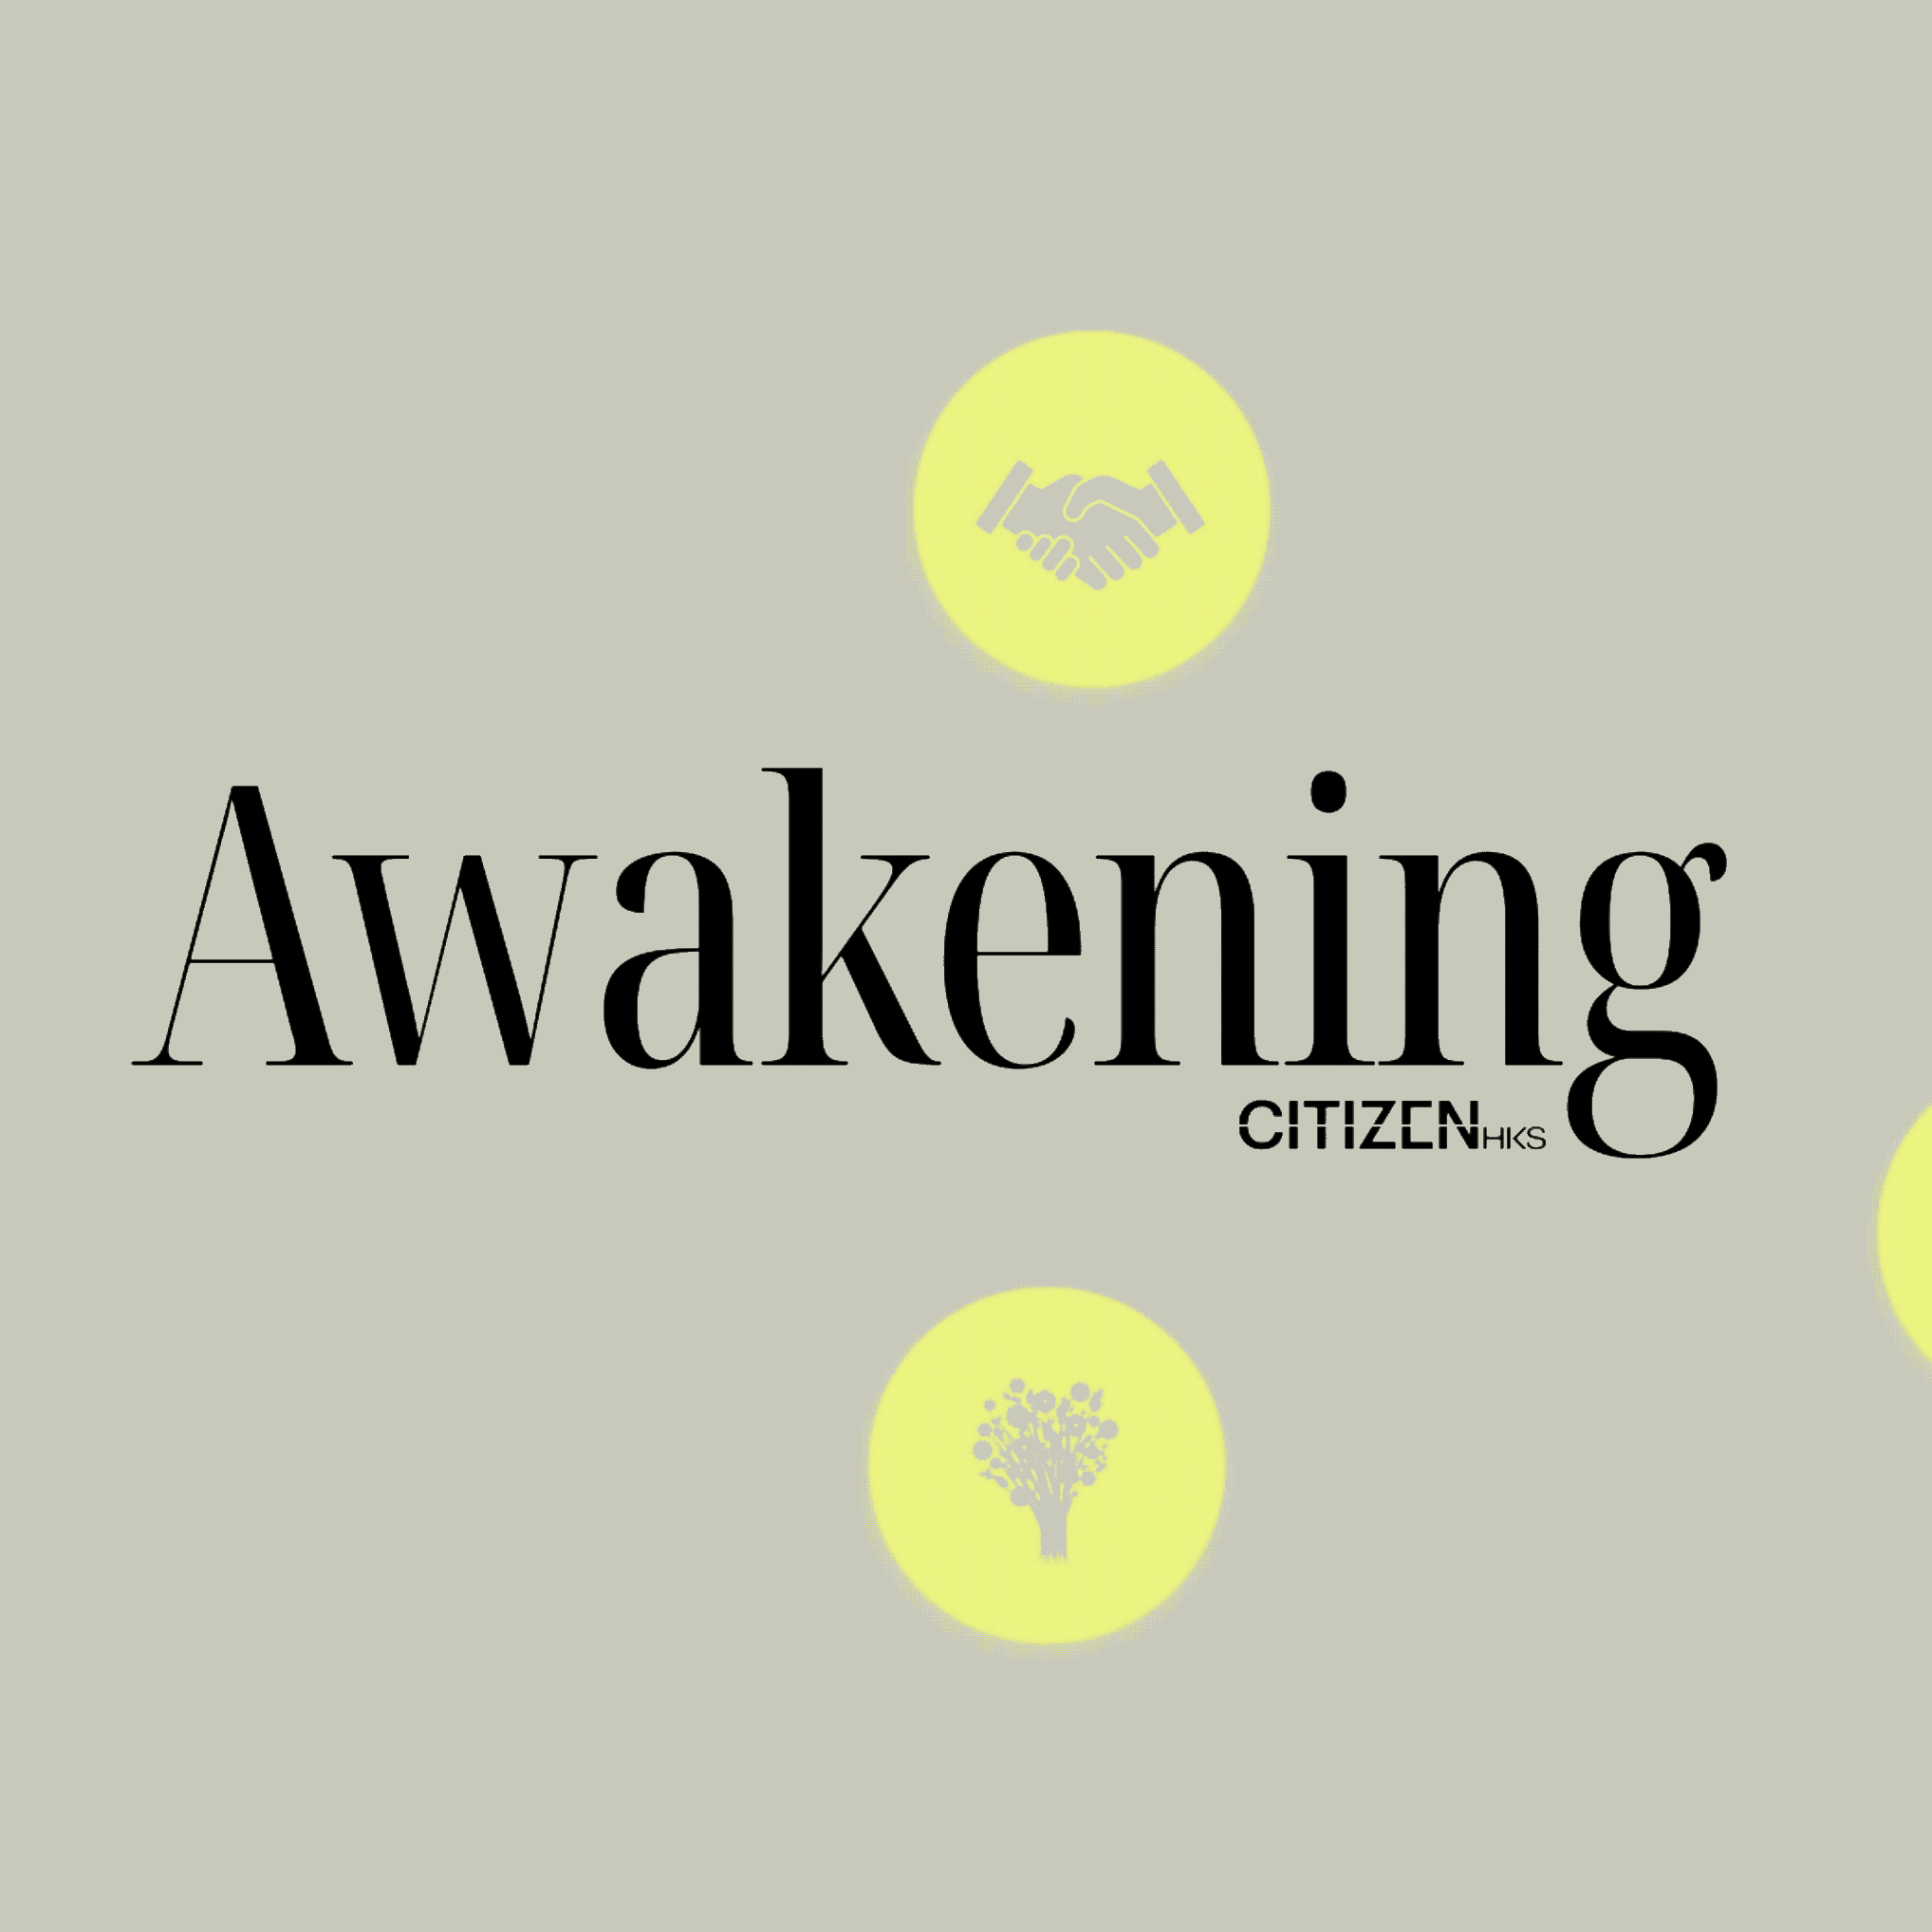 Awakening: Design for Sensory Well-being Transforms the Senior Living Experience